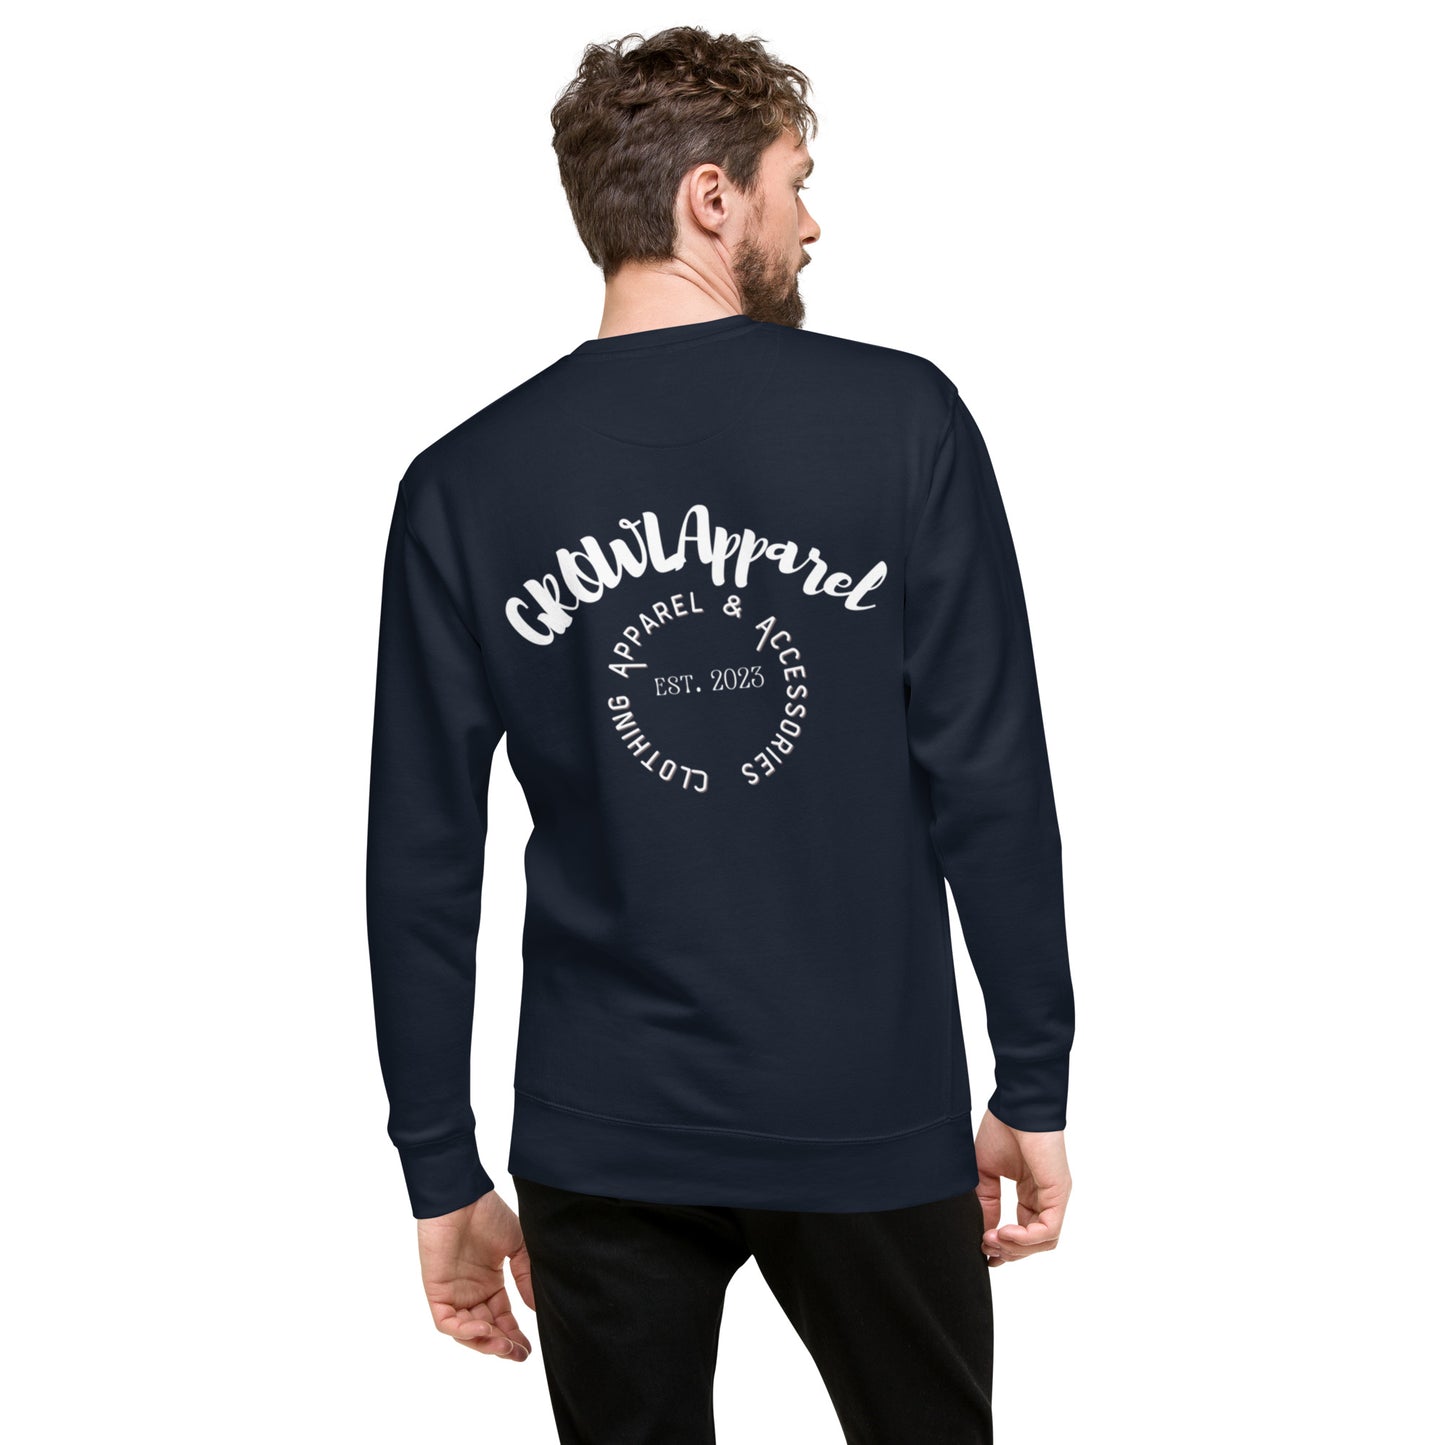 GROWLApparel New WHT LOGO - Unisex Premium Sweatshirt